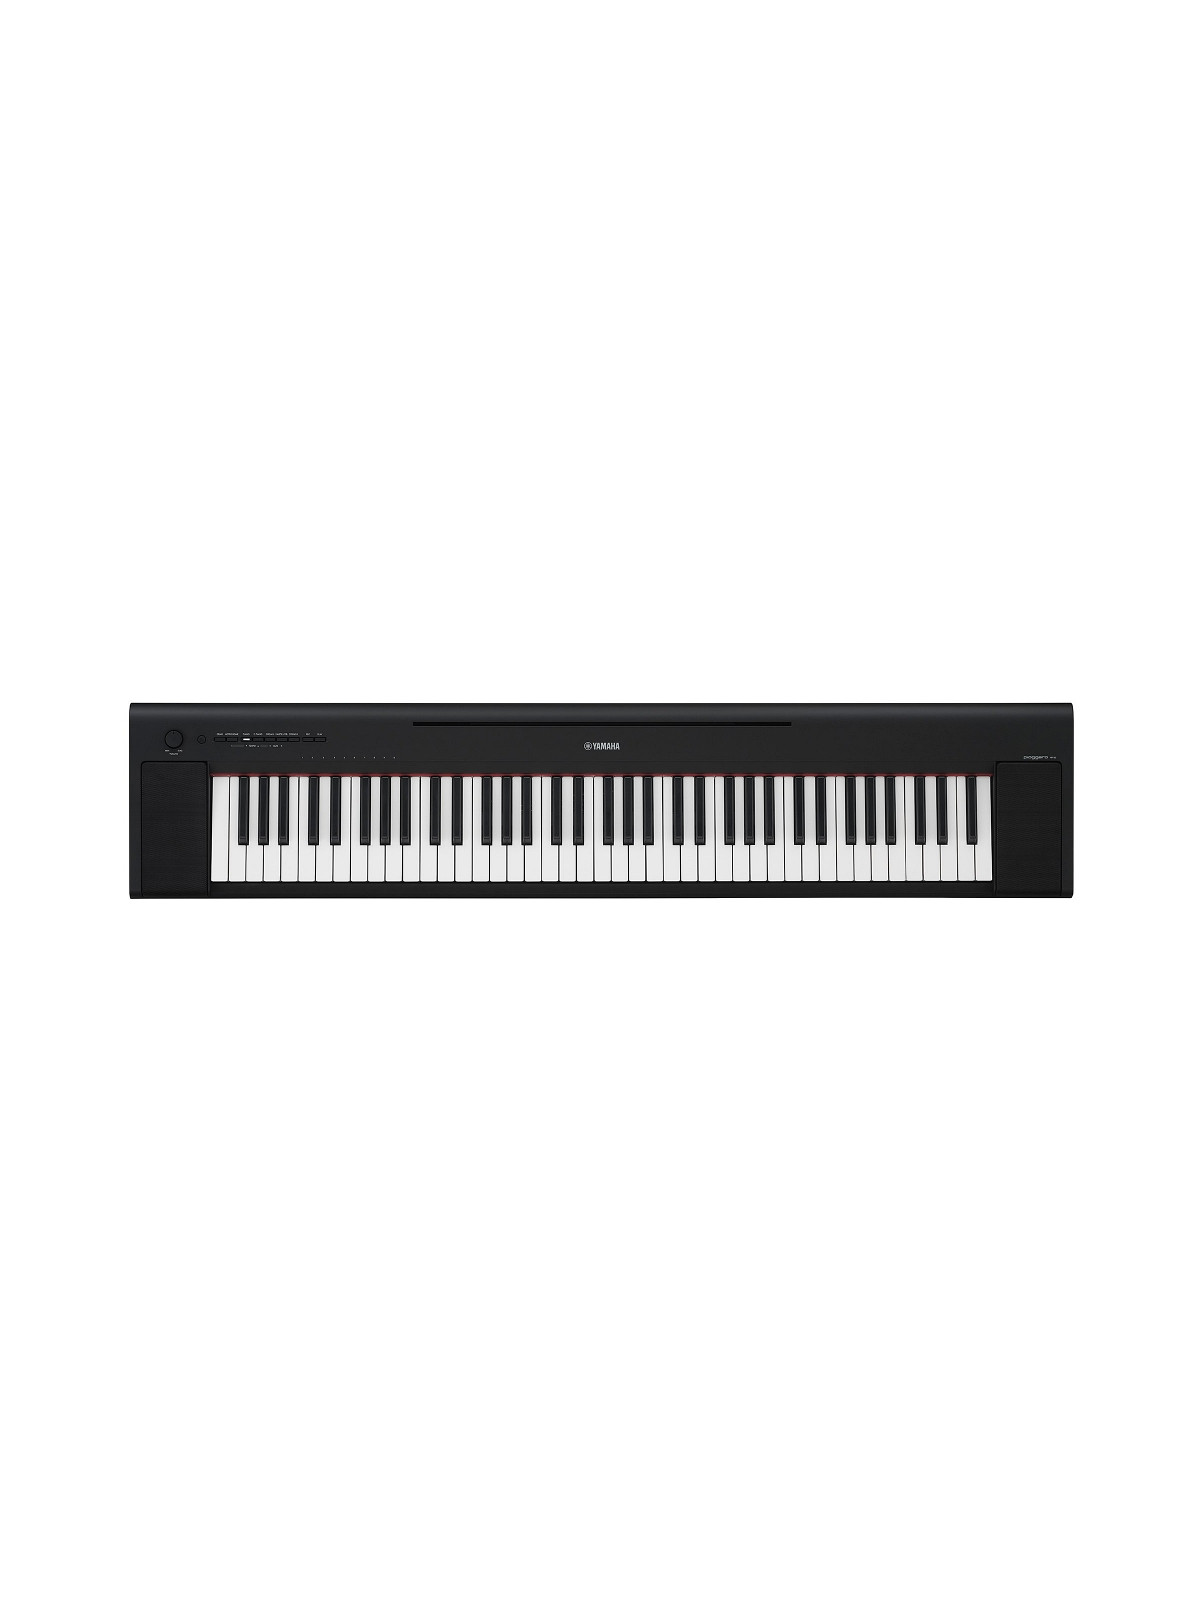 Piano portable Yamaha NP-35B noir d'initiation, simple et performant
Piano portable 76 touches